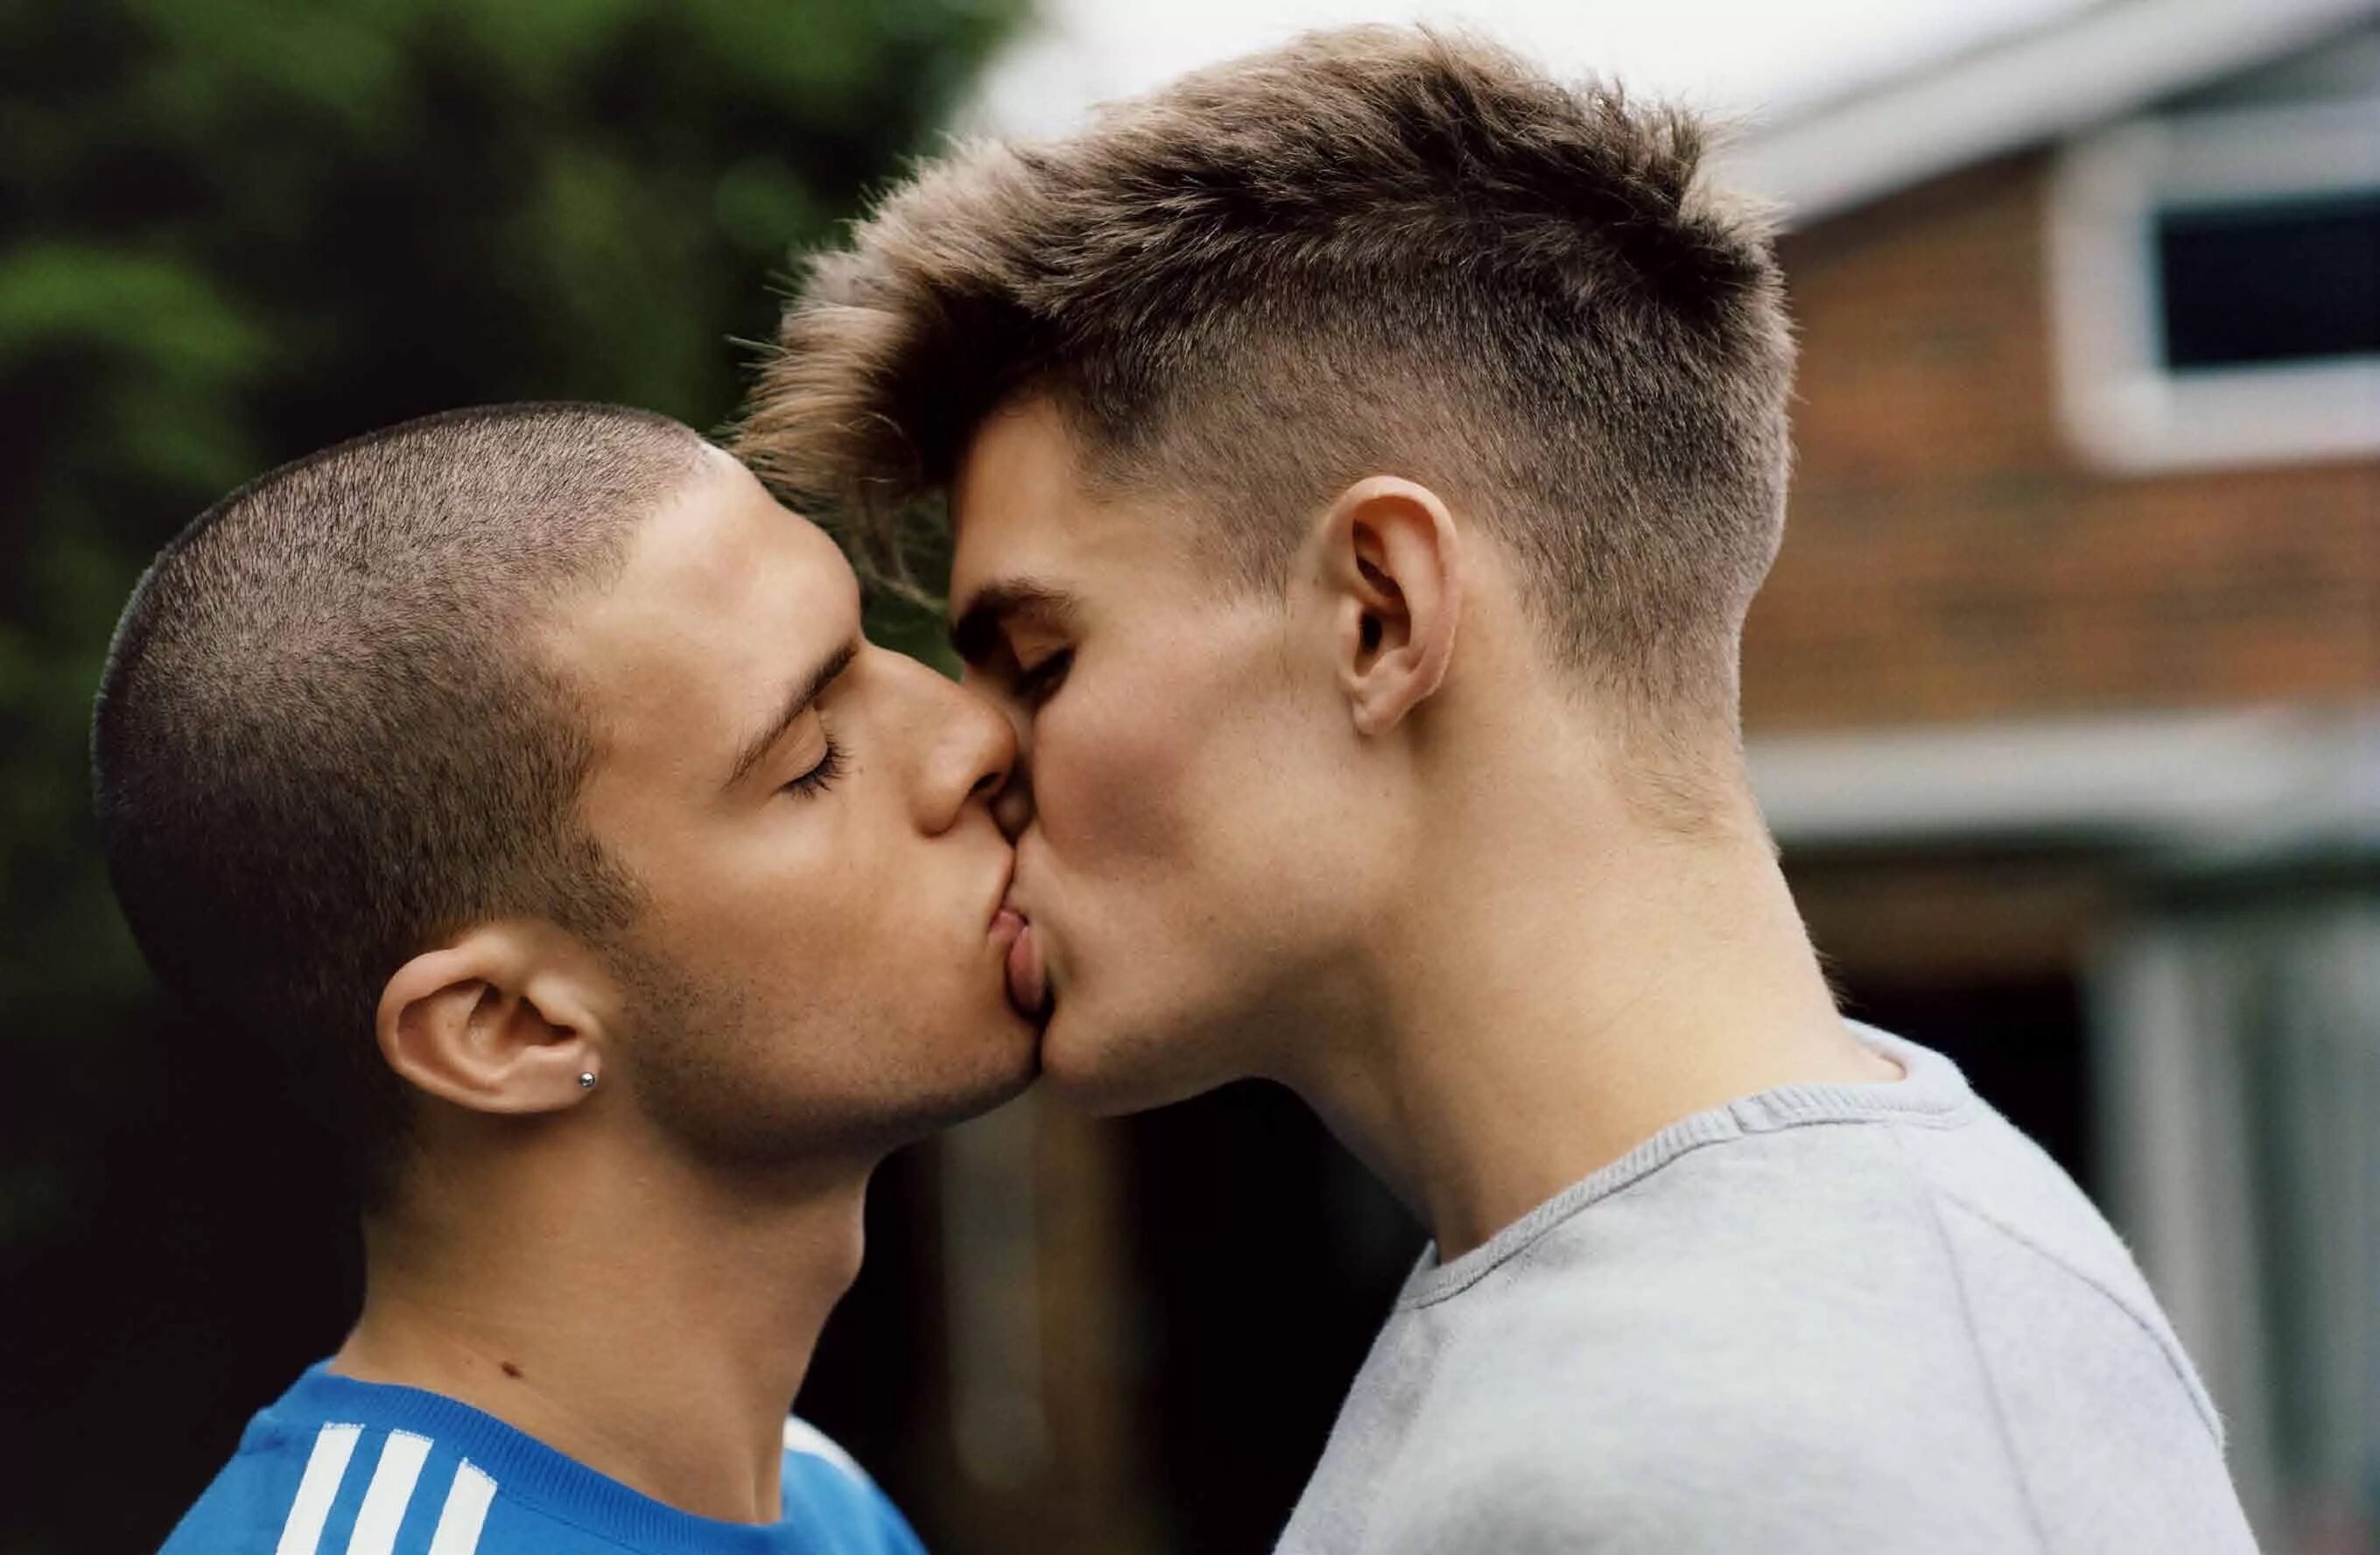 Мужчины целуются. Поцелуй двух мужчин. Однополый поцелуй. Парень целует парня.